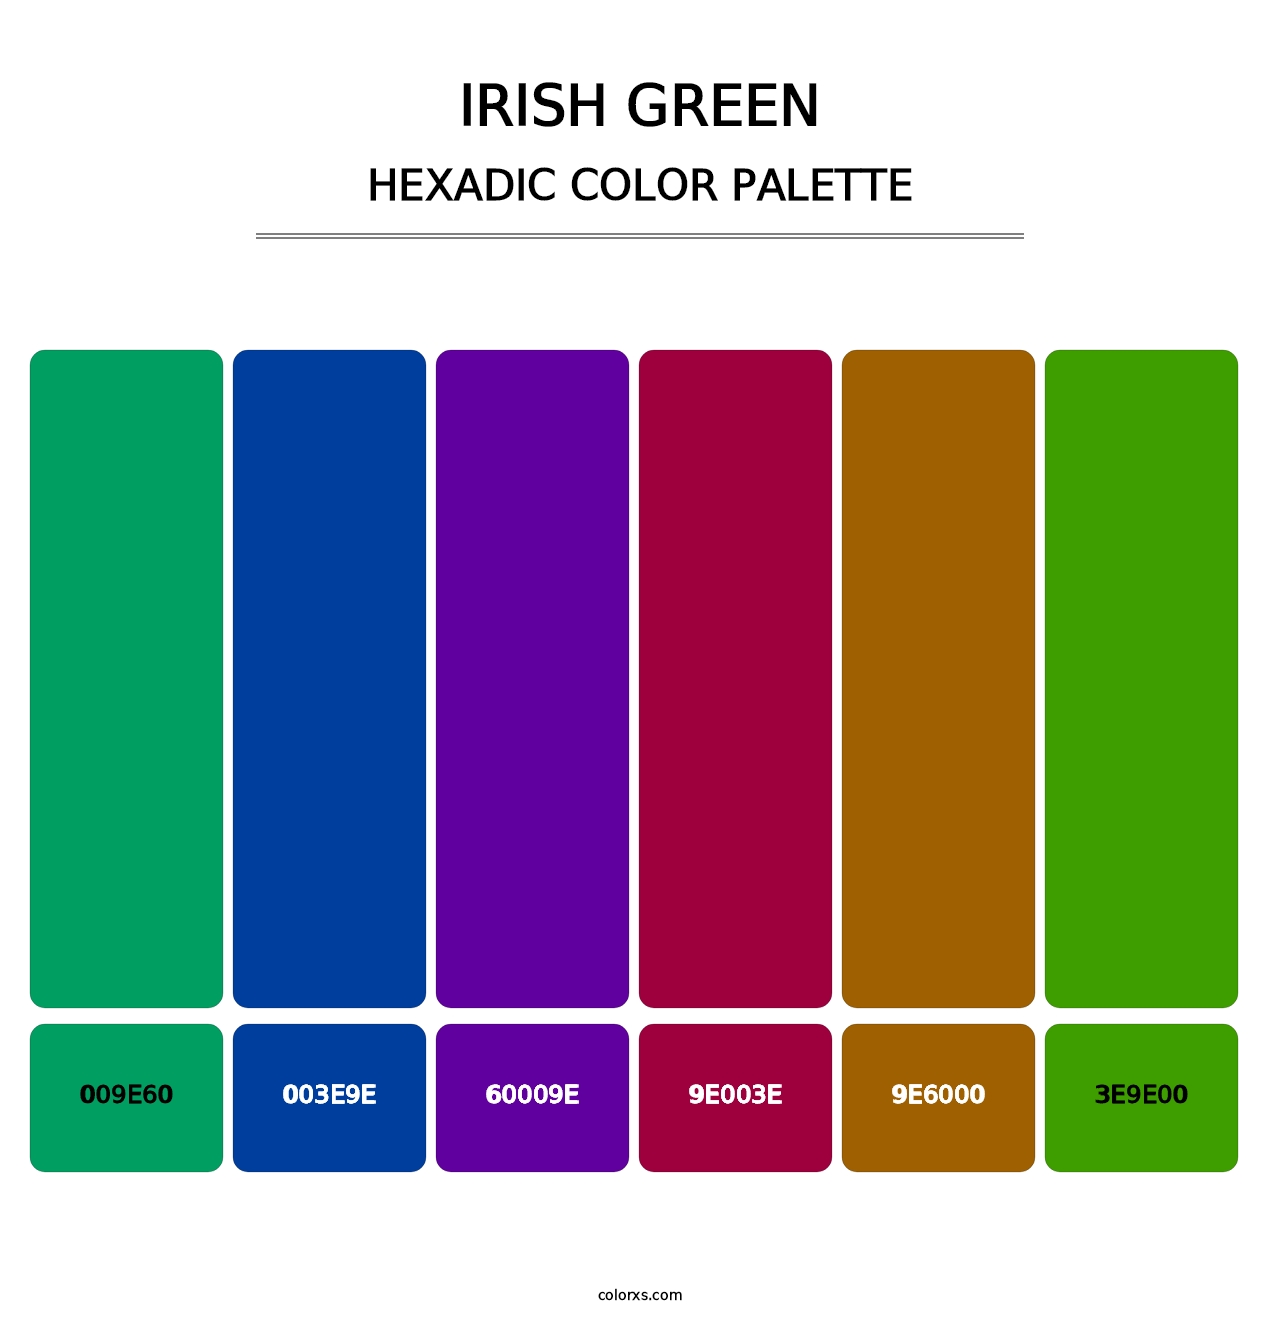 Irish Green - Hexadic Color Palette